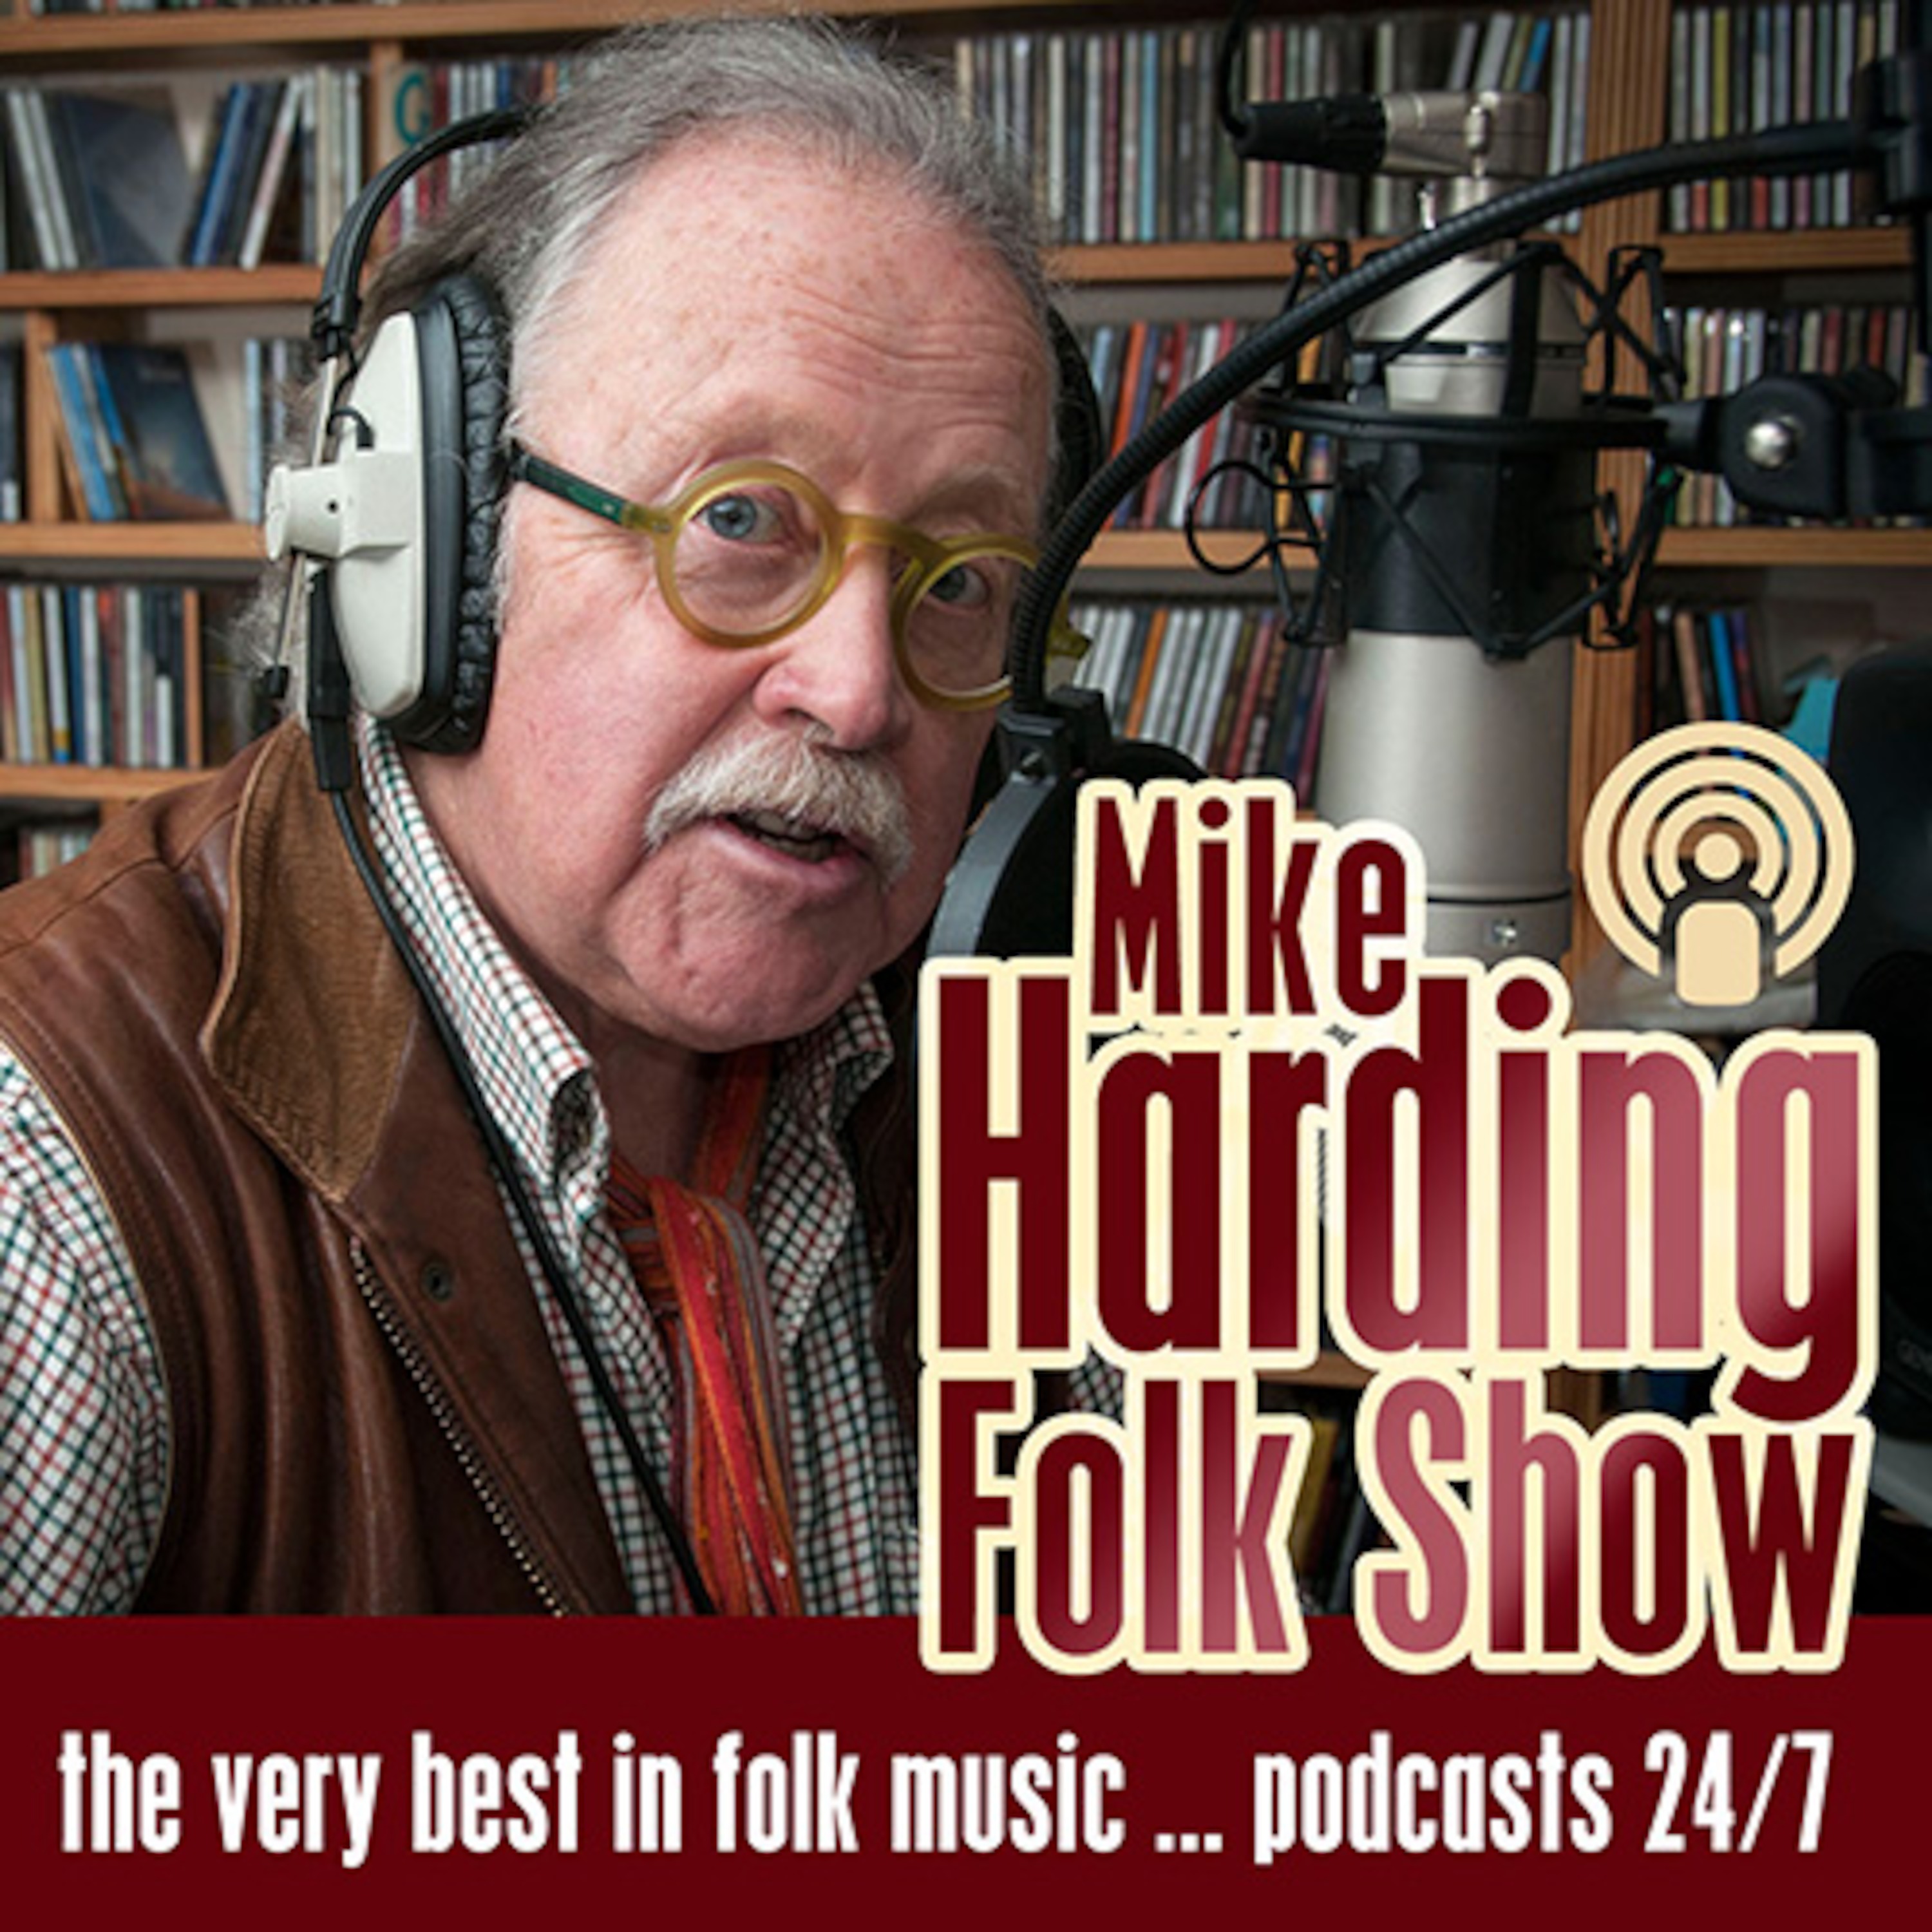 Mike Harding Folk Show 22